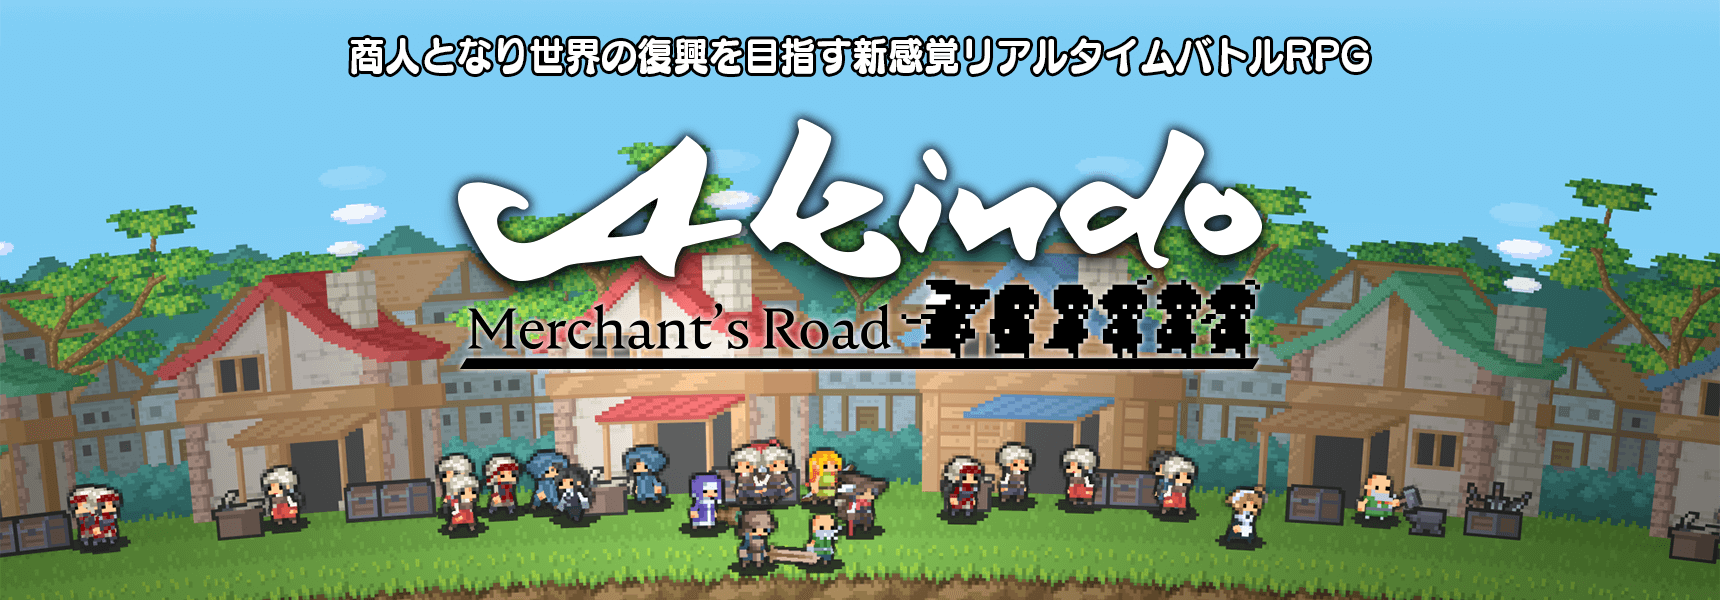 Akindo - Merchant's Road